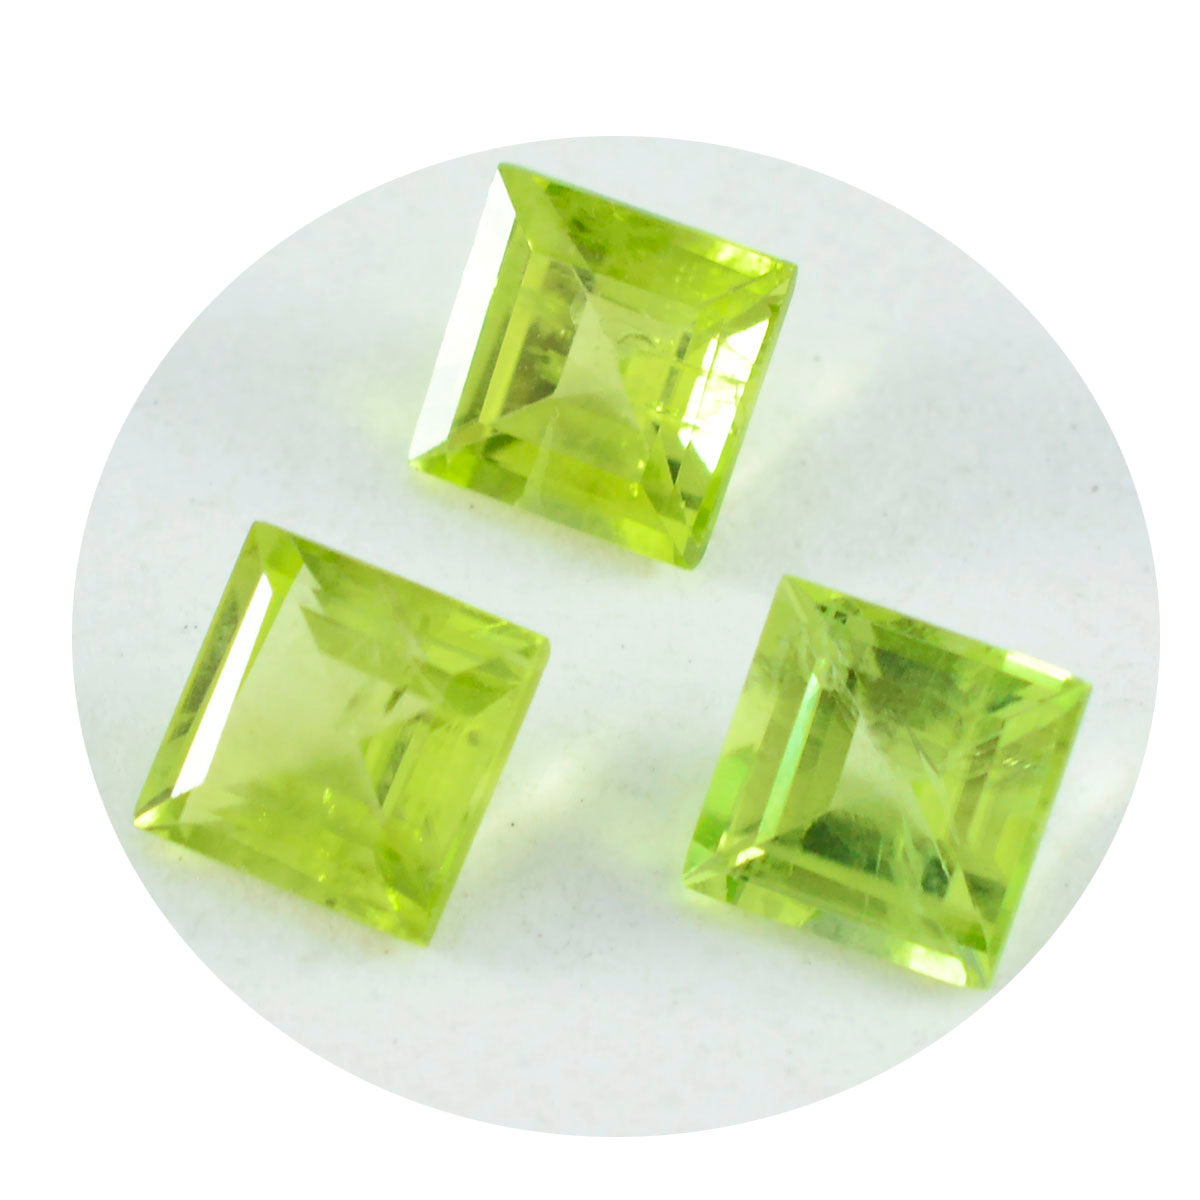 riyogems 1pc リアル グリーン ペリドット ファセット 11x11 mm 正方形の形状の素晴らしい品質のルース宝石